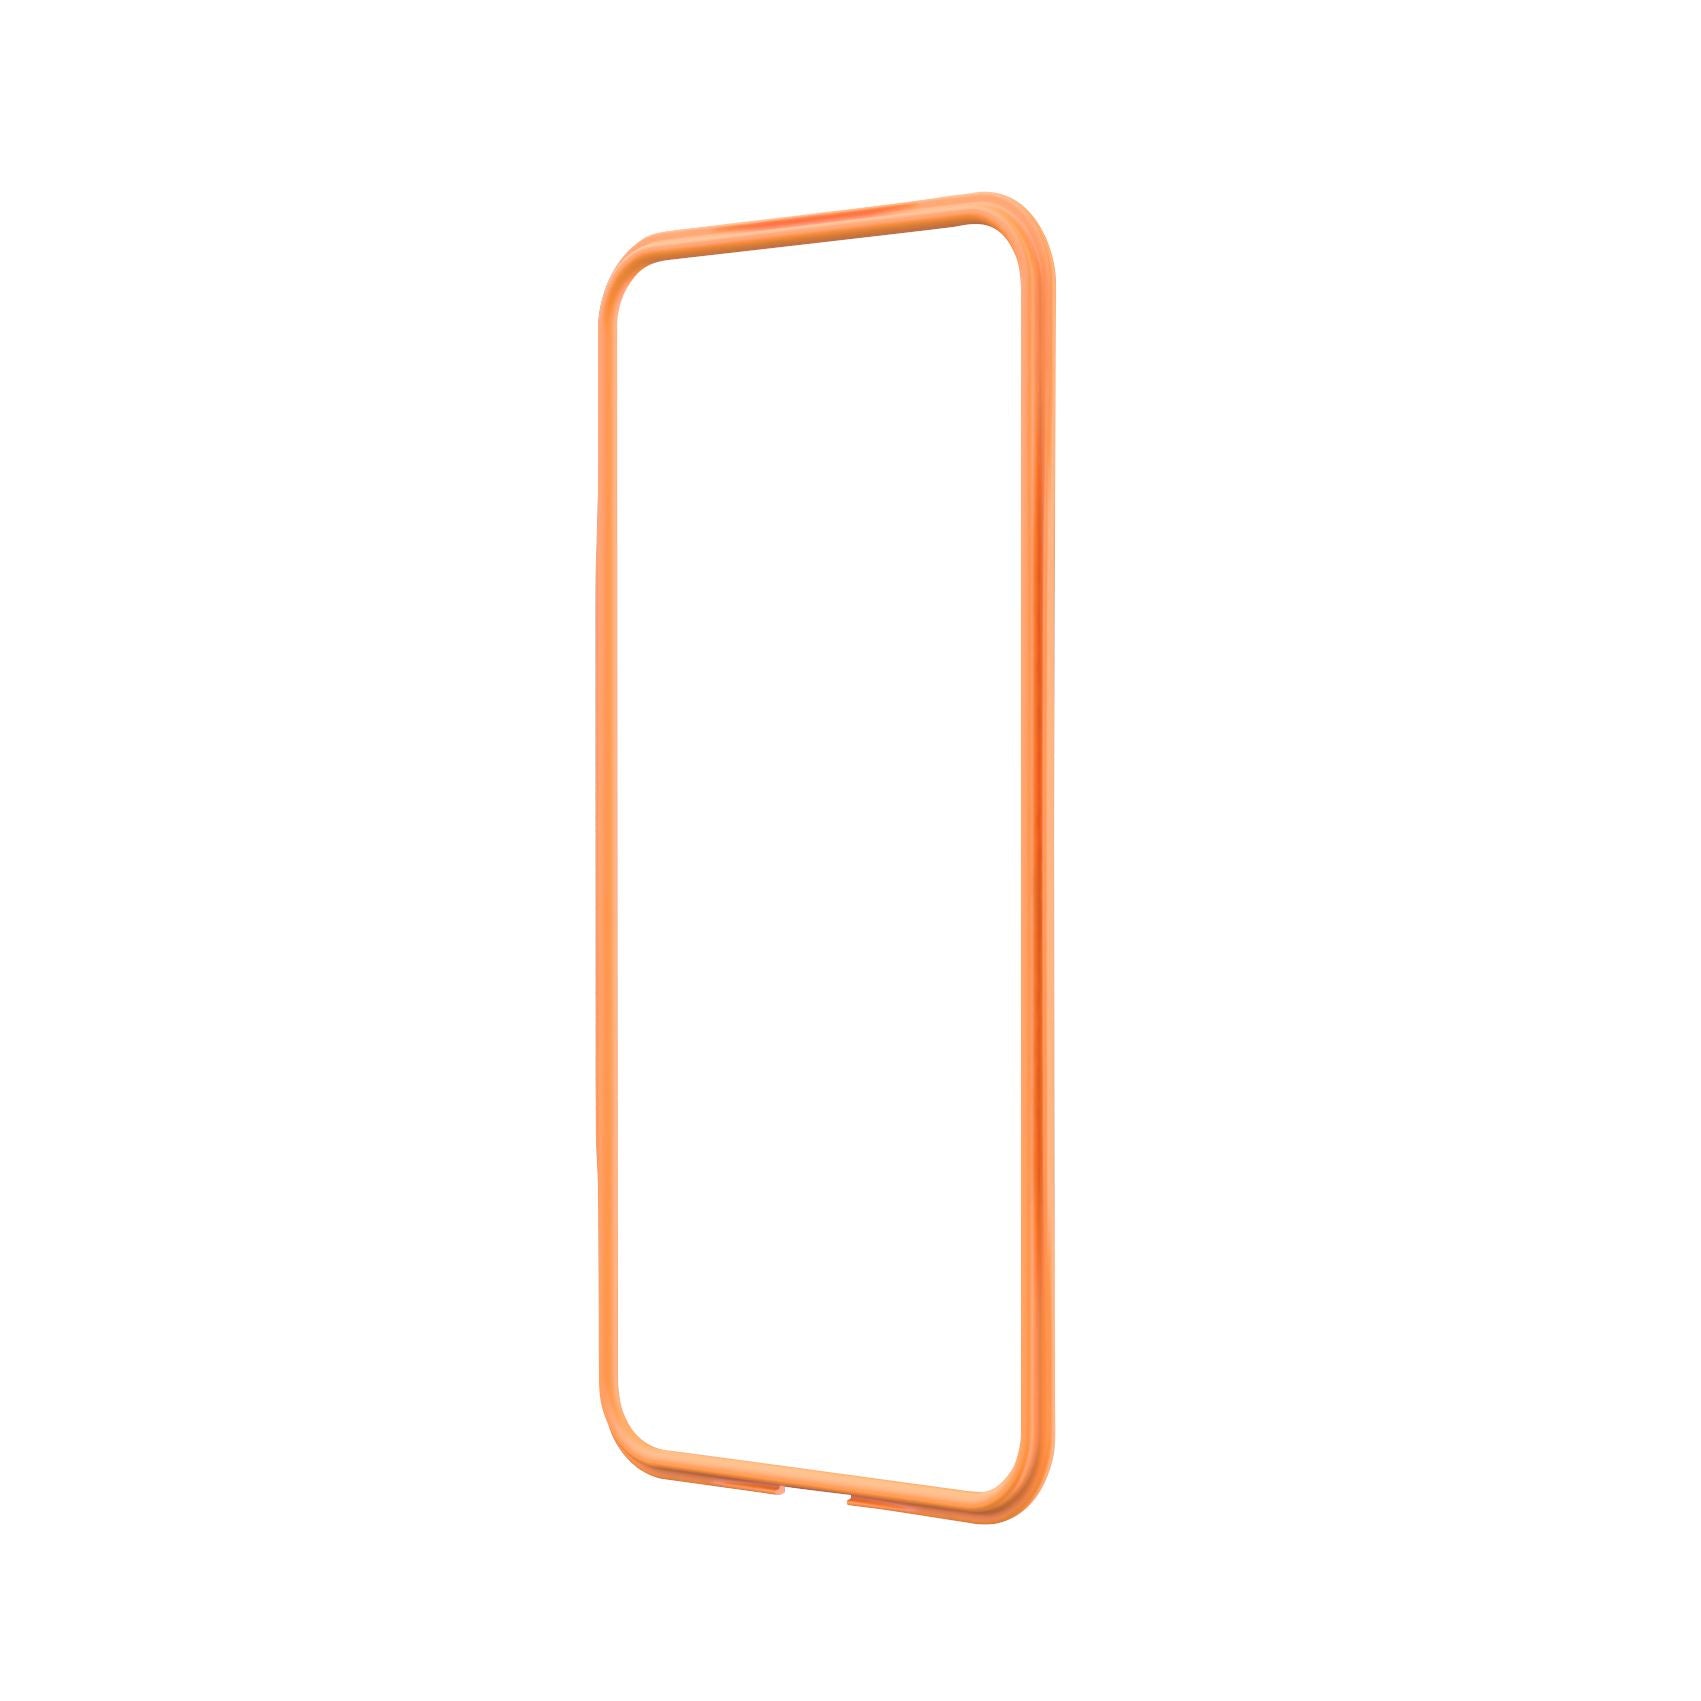 RhinoShield Mod NX Modular Case for iPhone 12 Series (2020) iPhone 12 Series RhinoShield iPhone 12/12 Pro 6.1" Orange (Rim) 